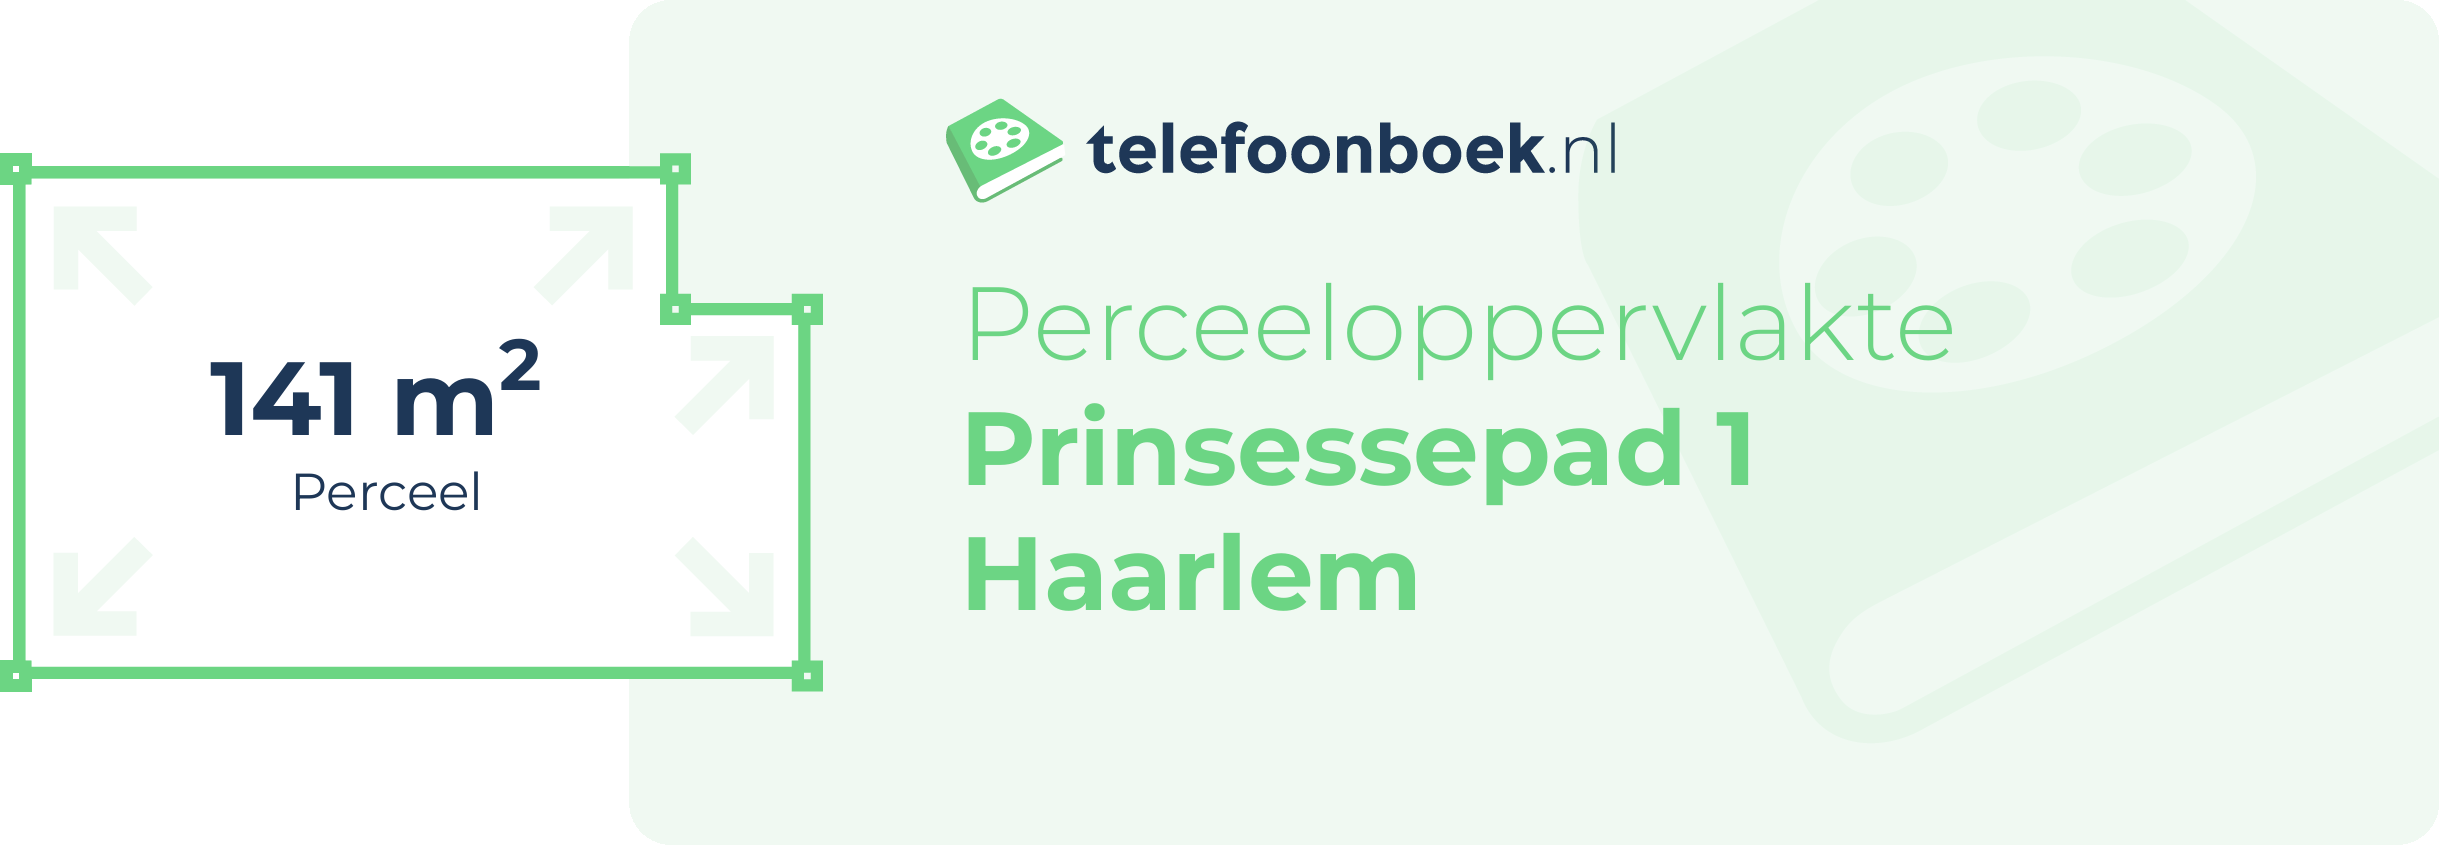 Perceeloppervlakte Prinsessepad 1 Haarlem